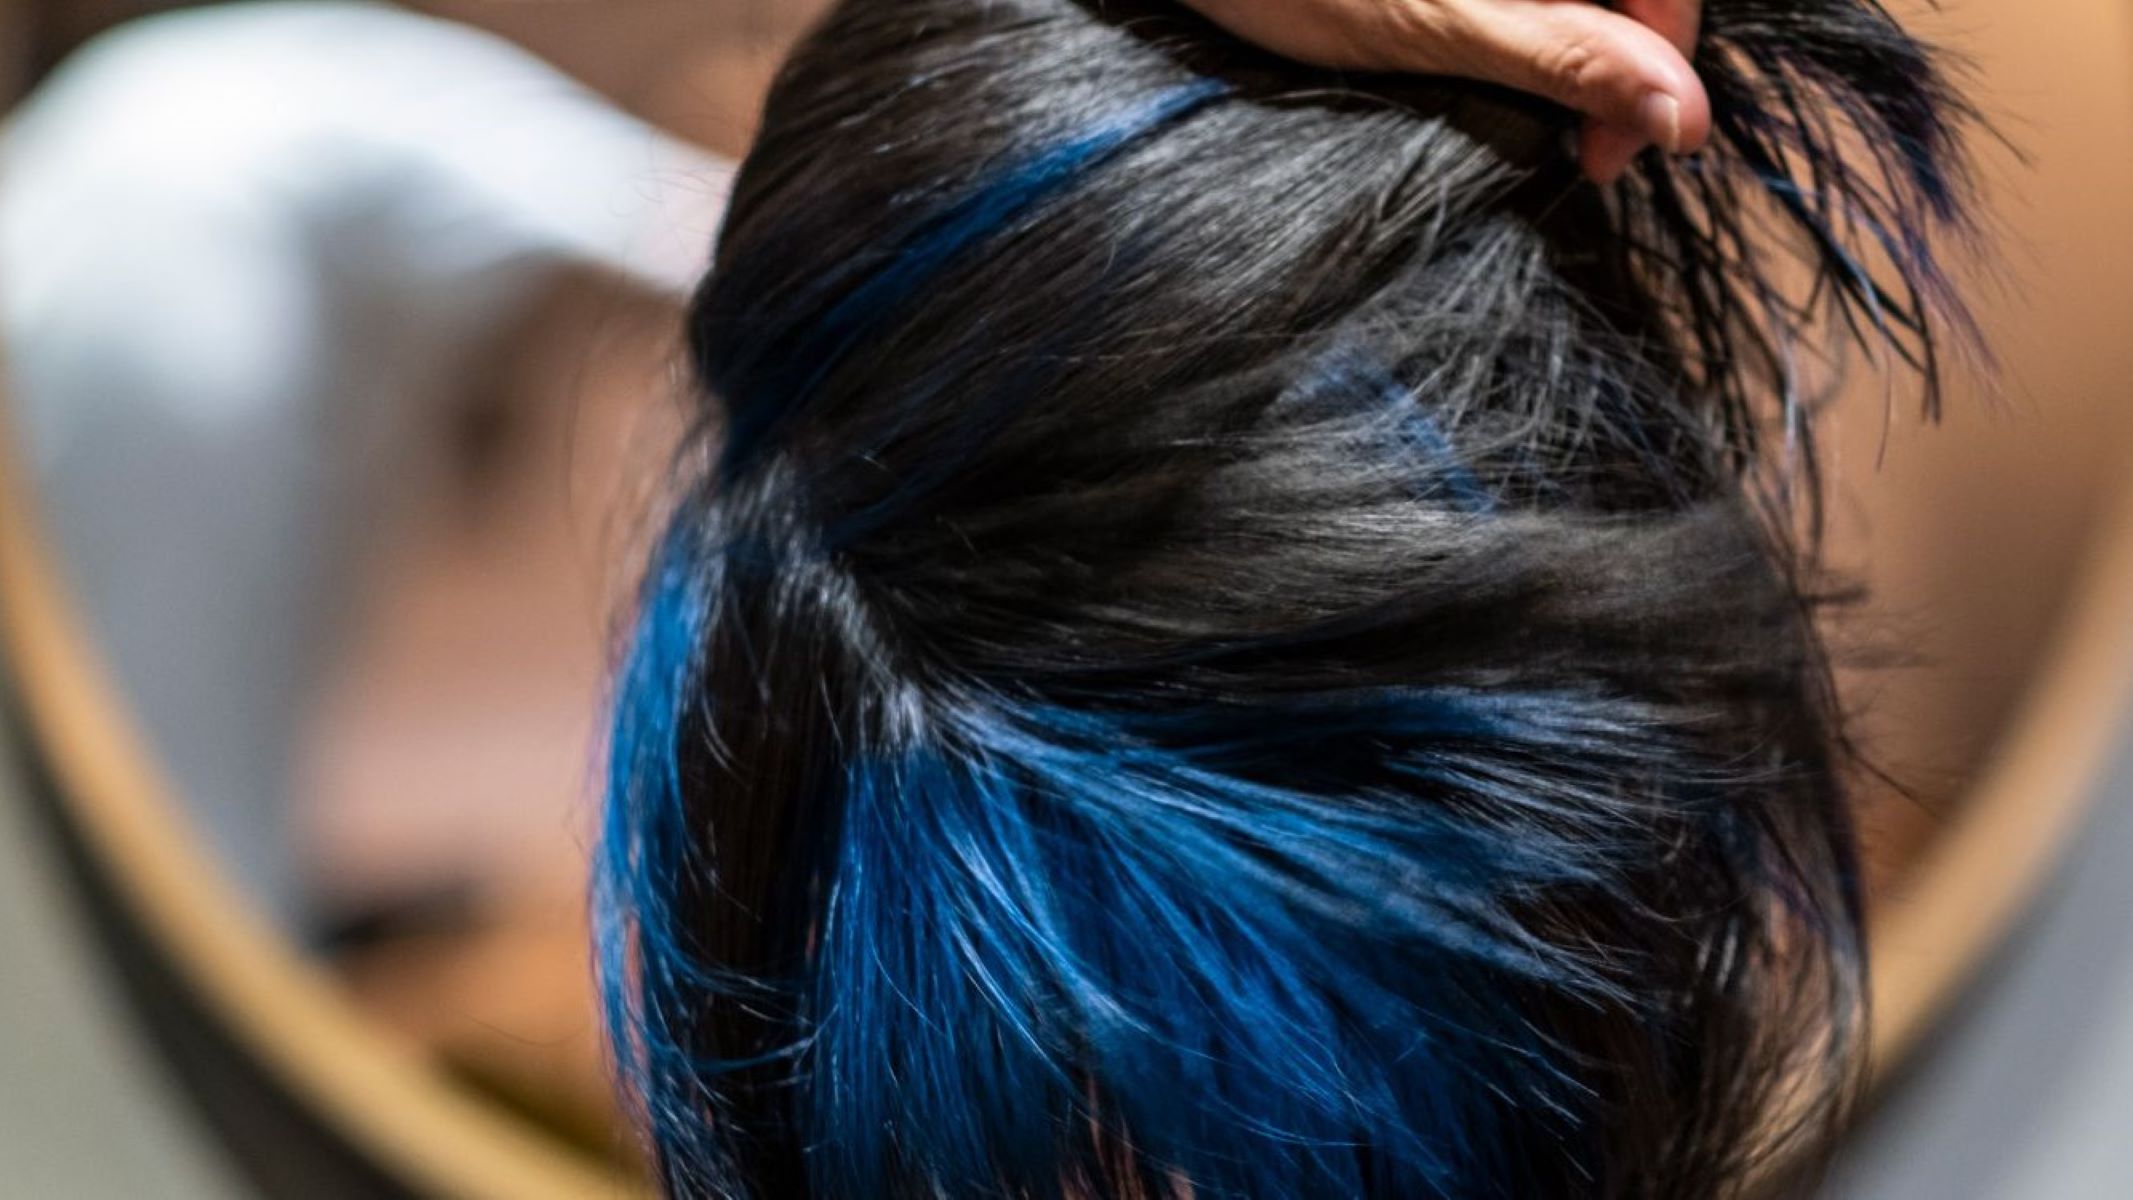 The Ultimate Blue Hair Dye For Dark Hair - No Damage Guaranteed!